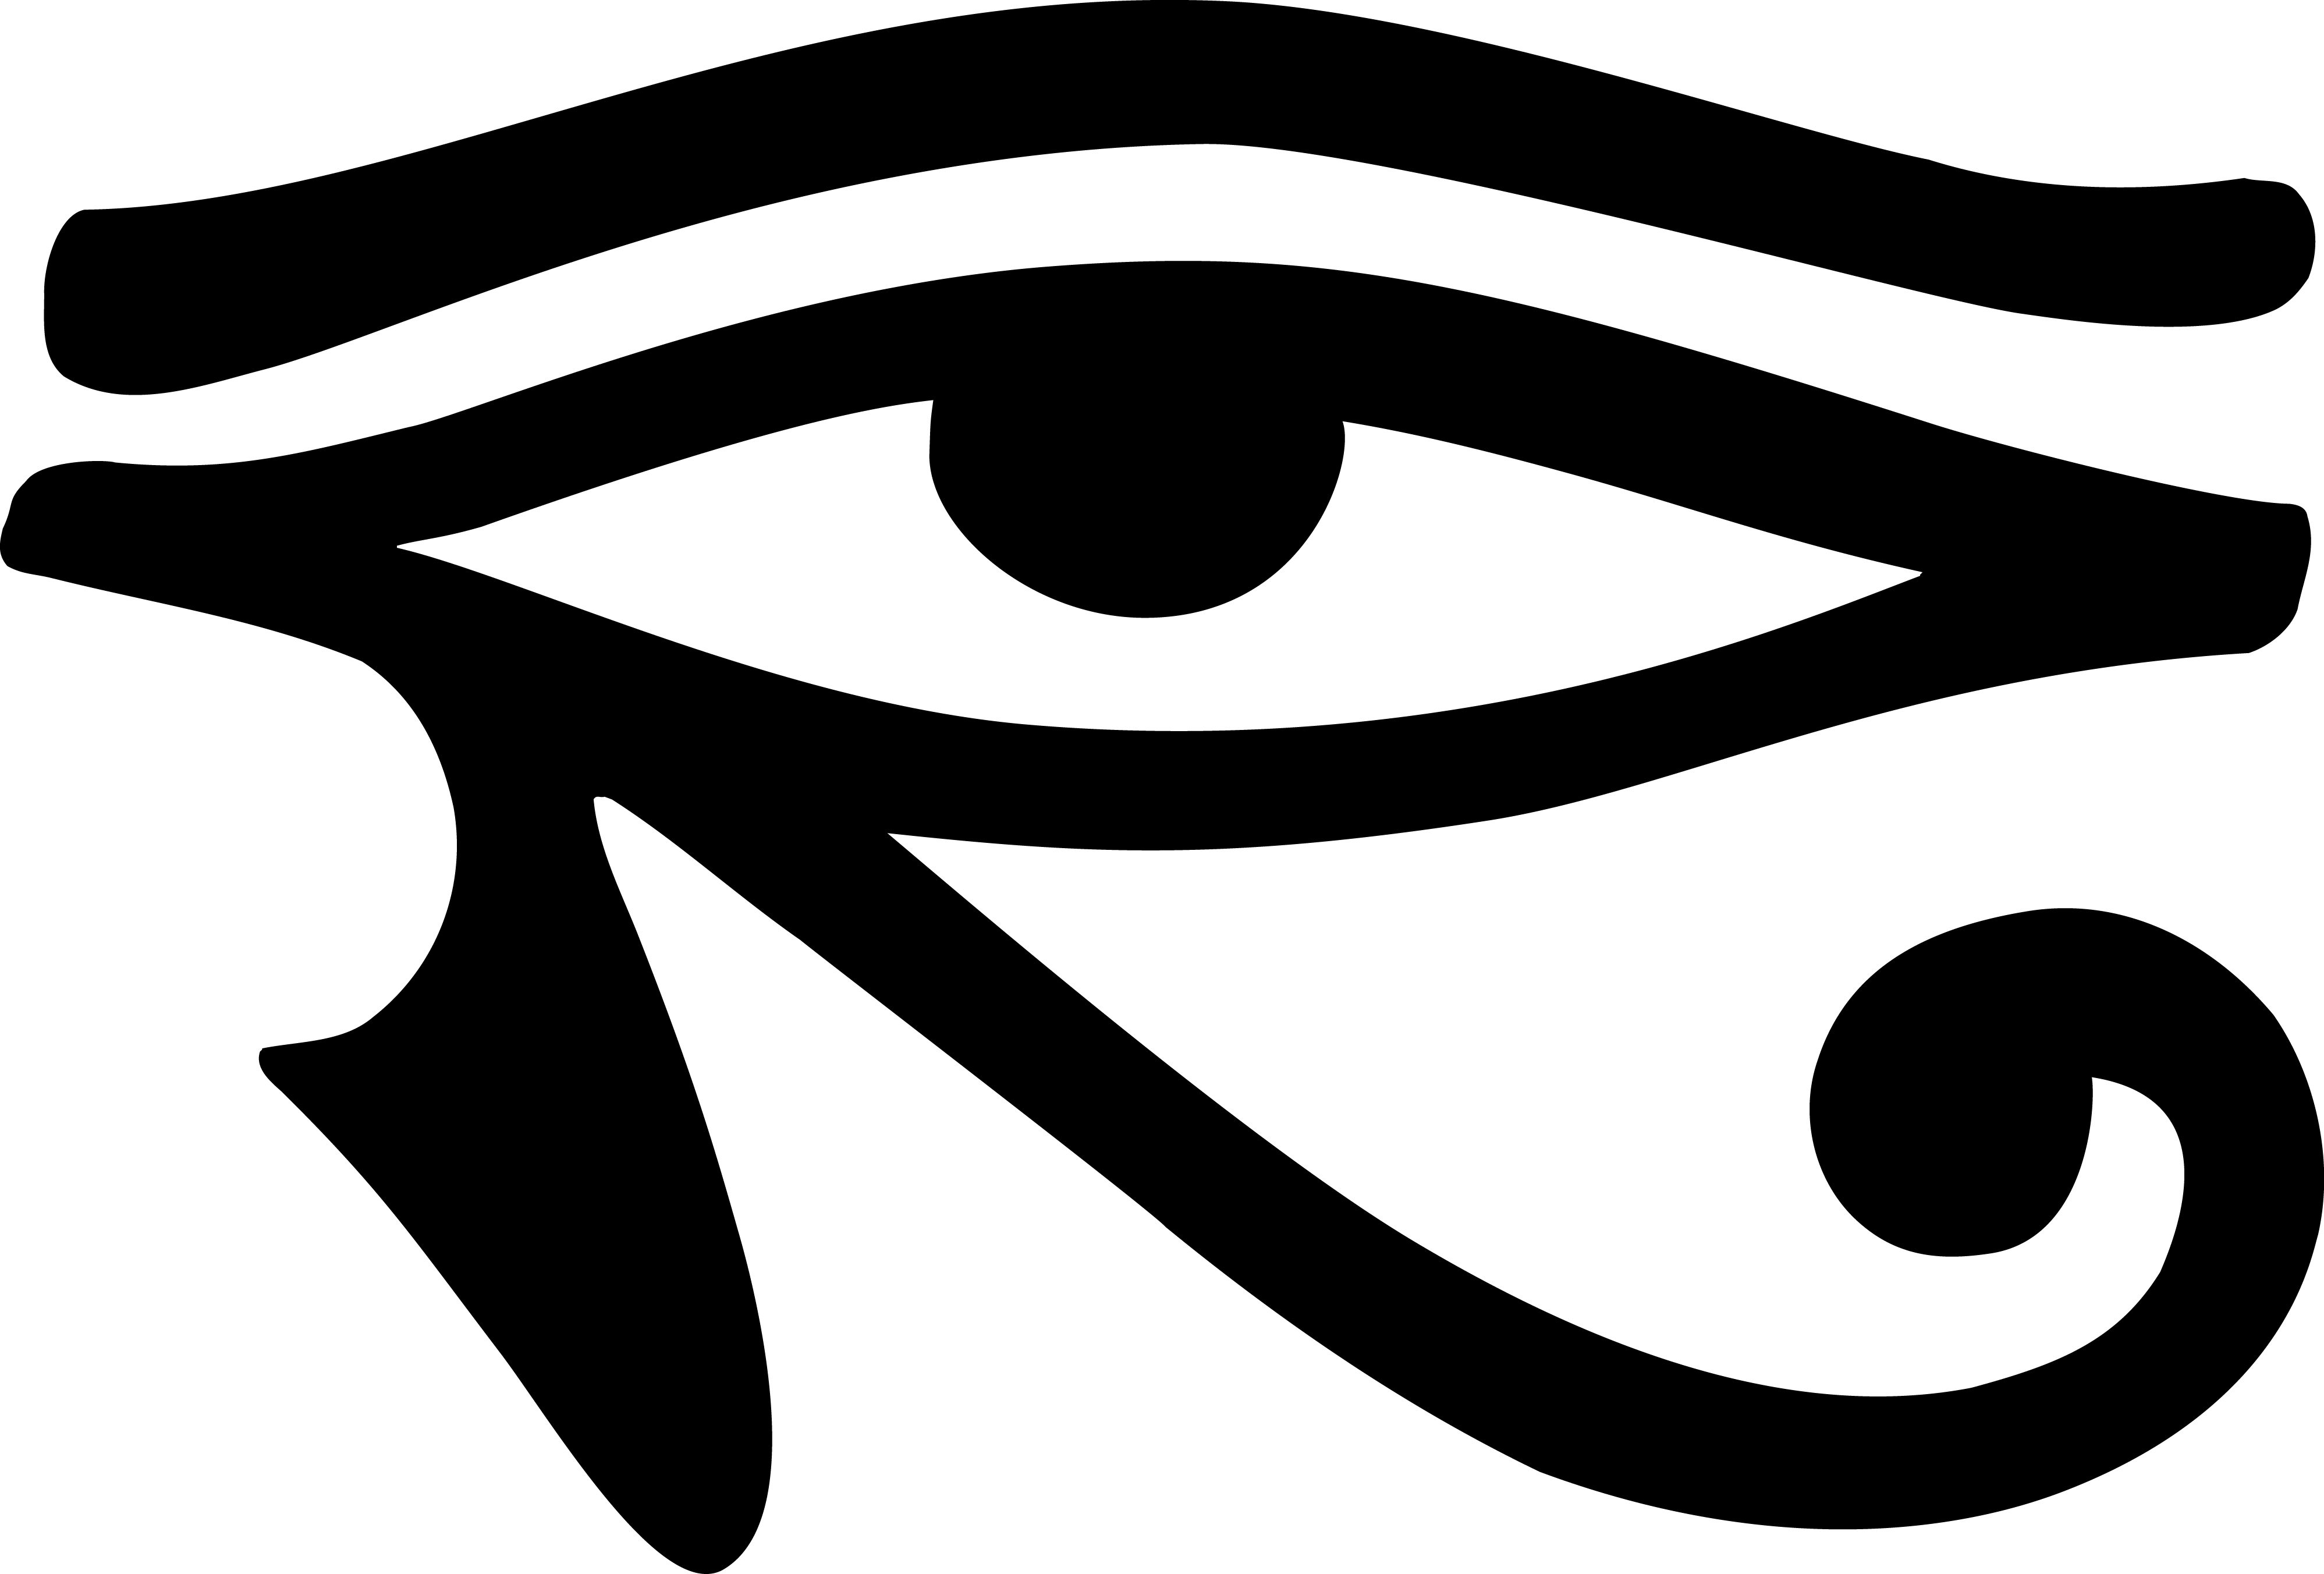 Eye of Horuz